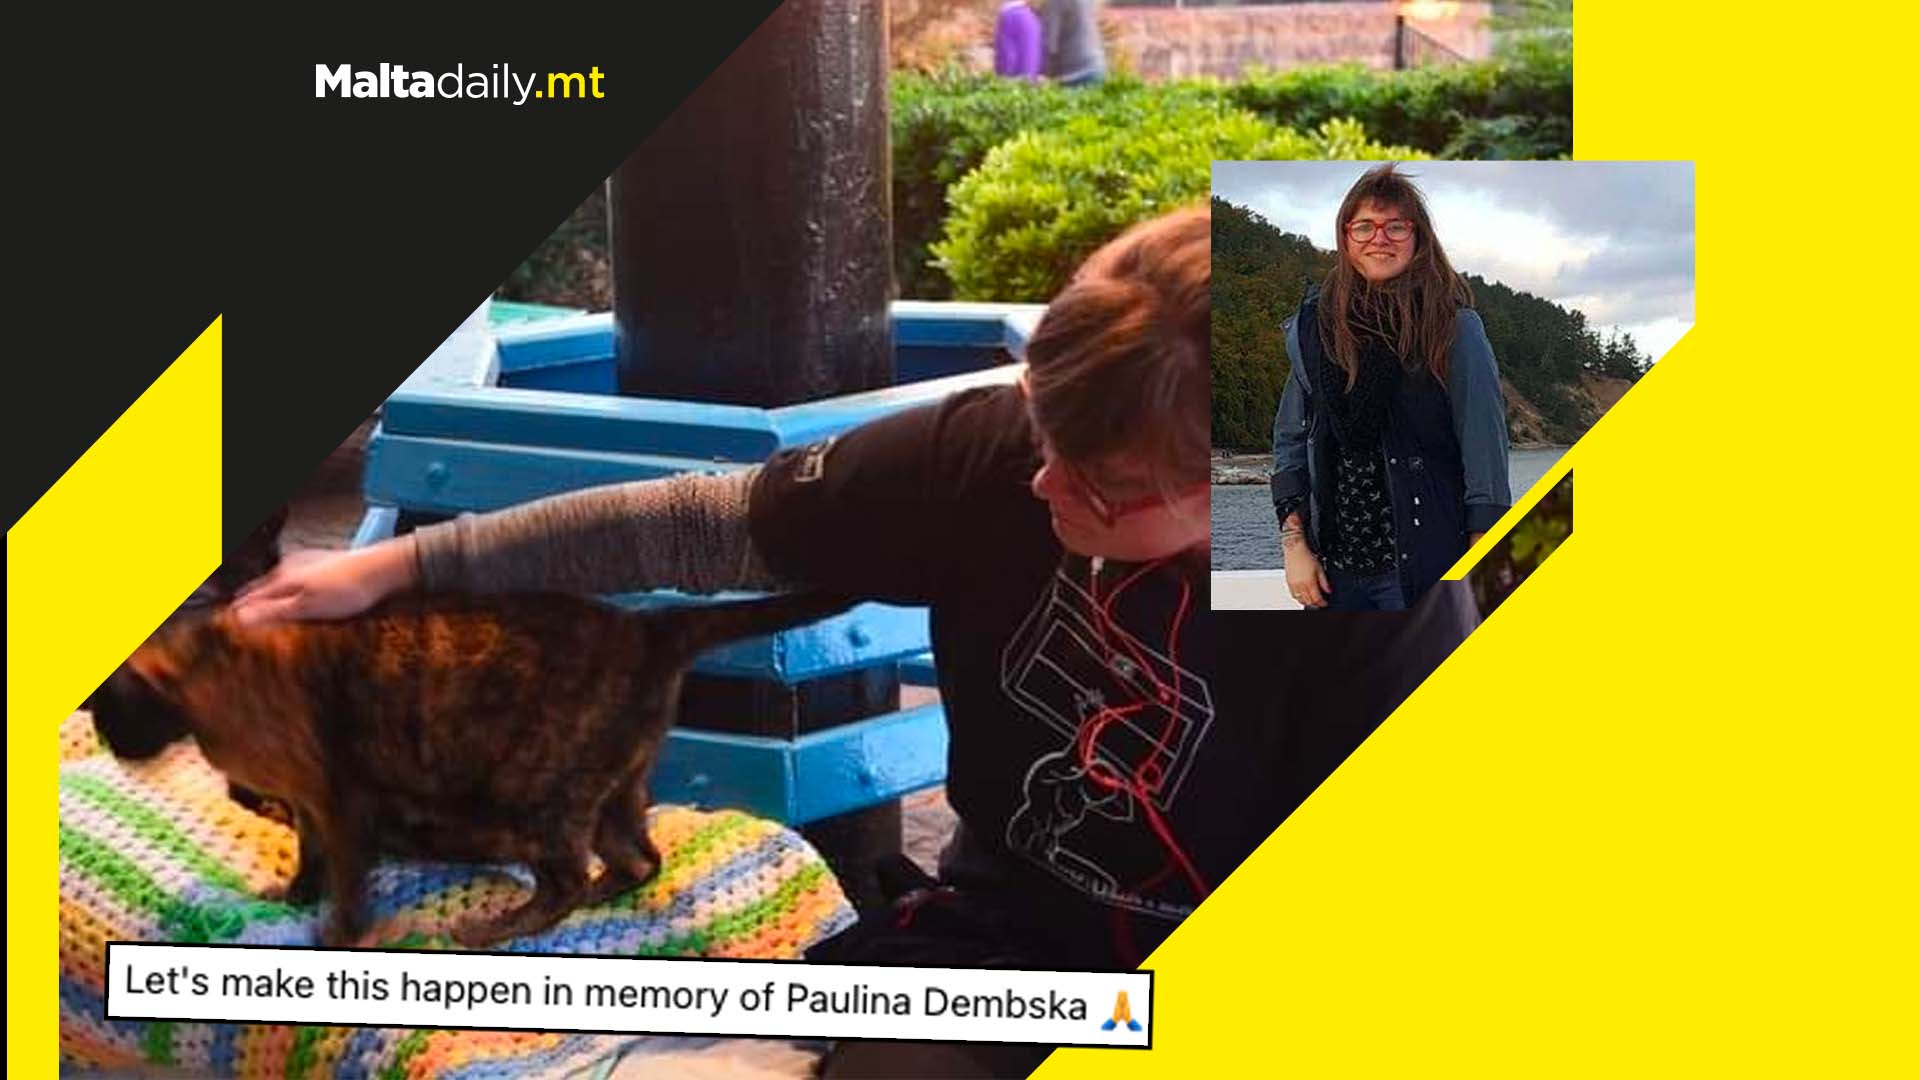 Animal rights NGO starts funding campaign for Paulina Dembska memorial